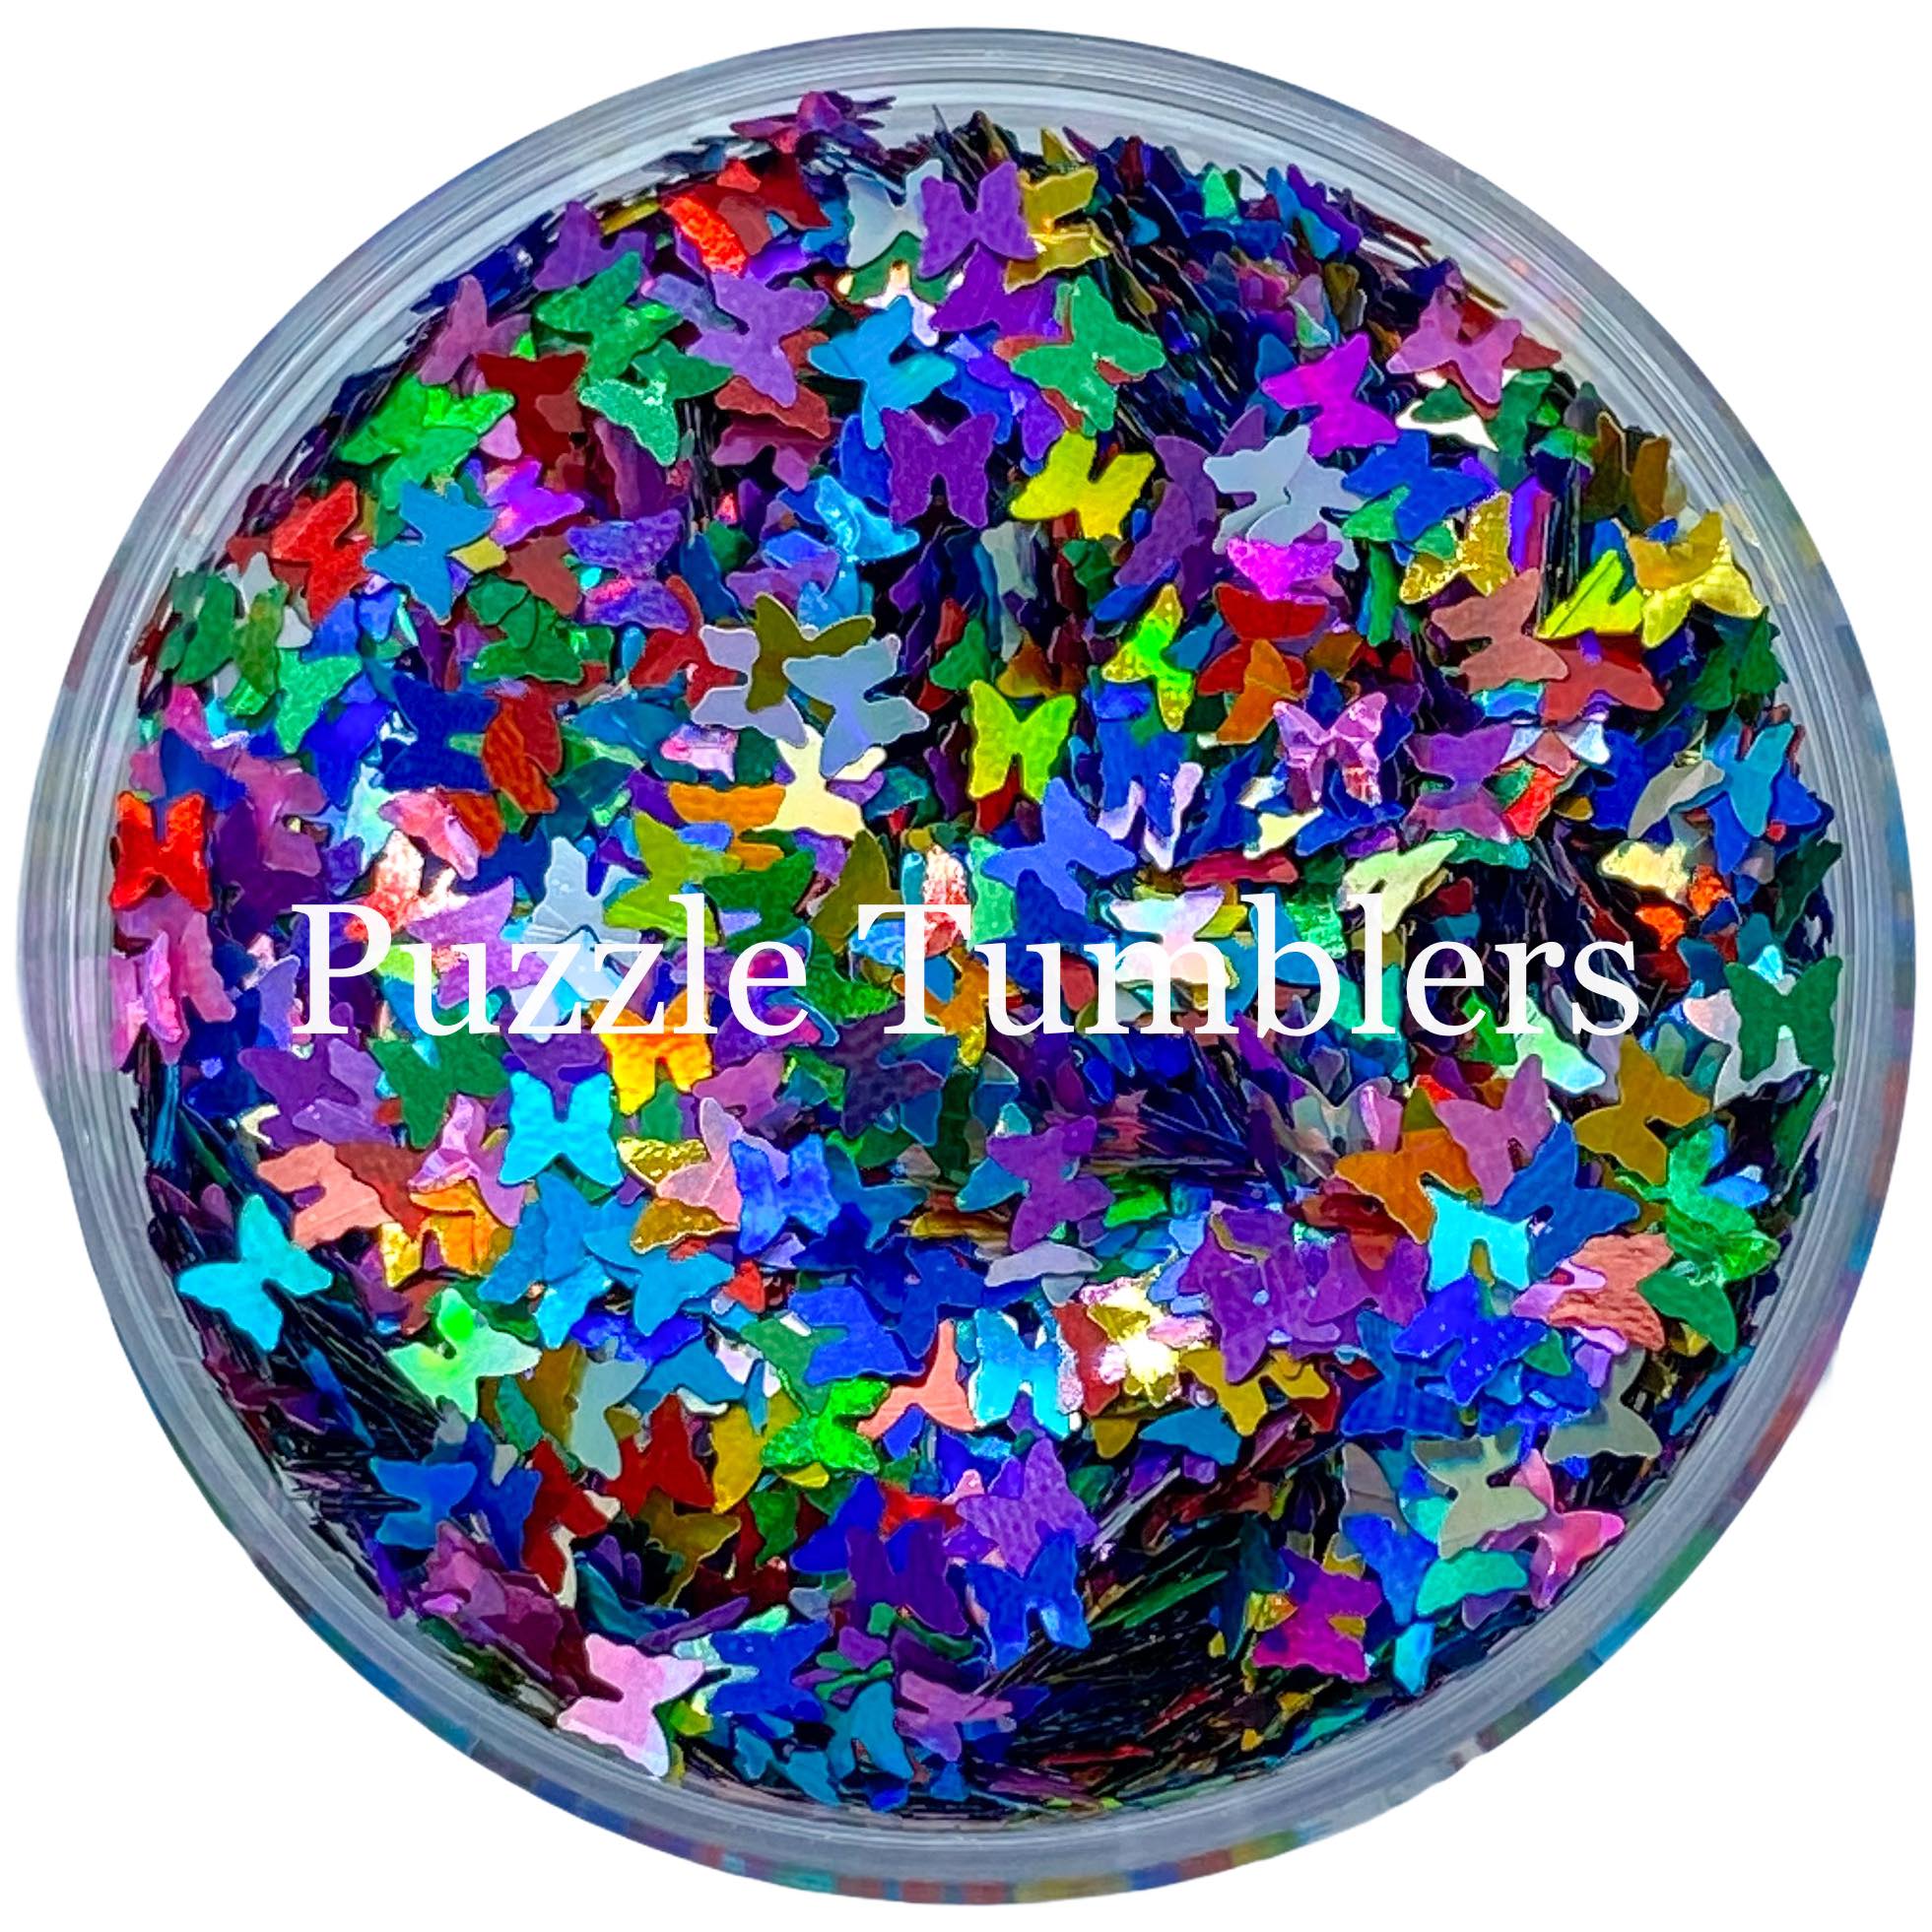 FERRARI RED - FINE GLITTER – Puzzle Tumblers